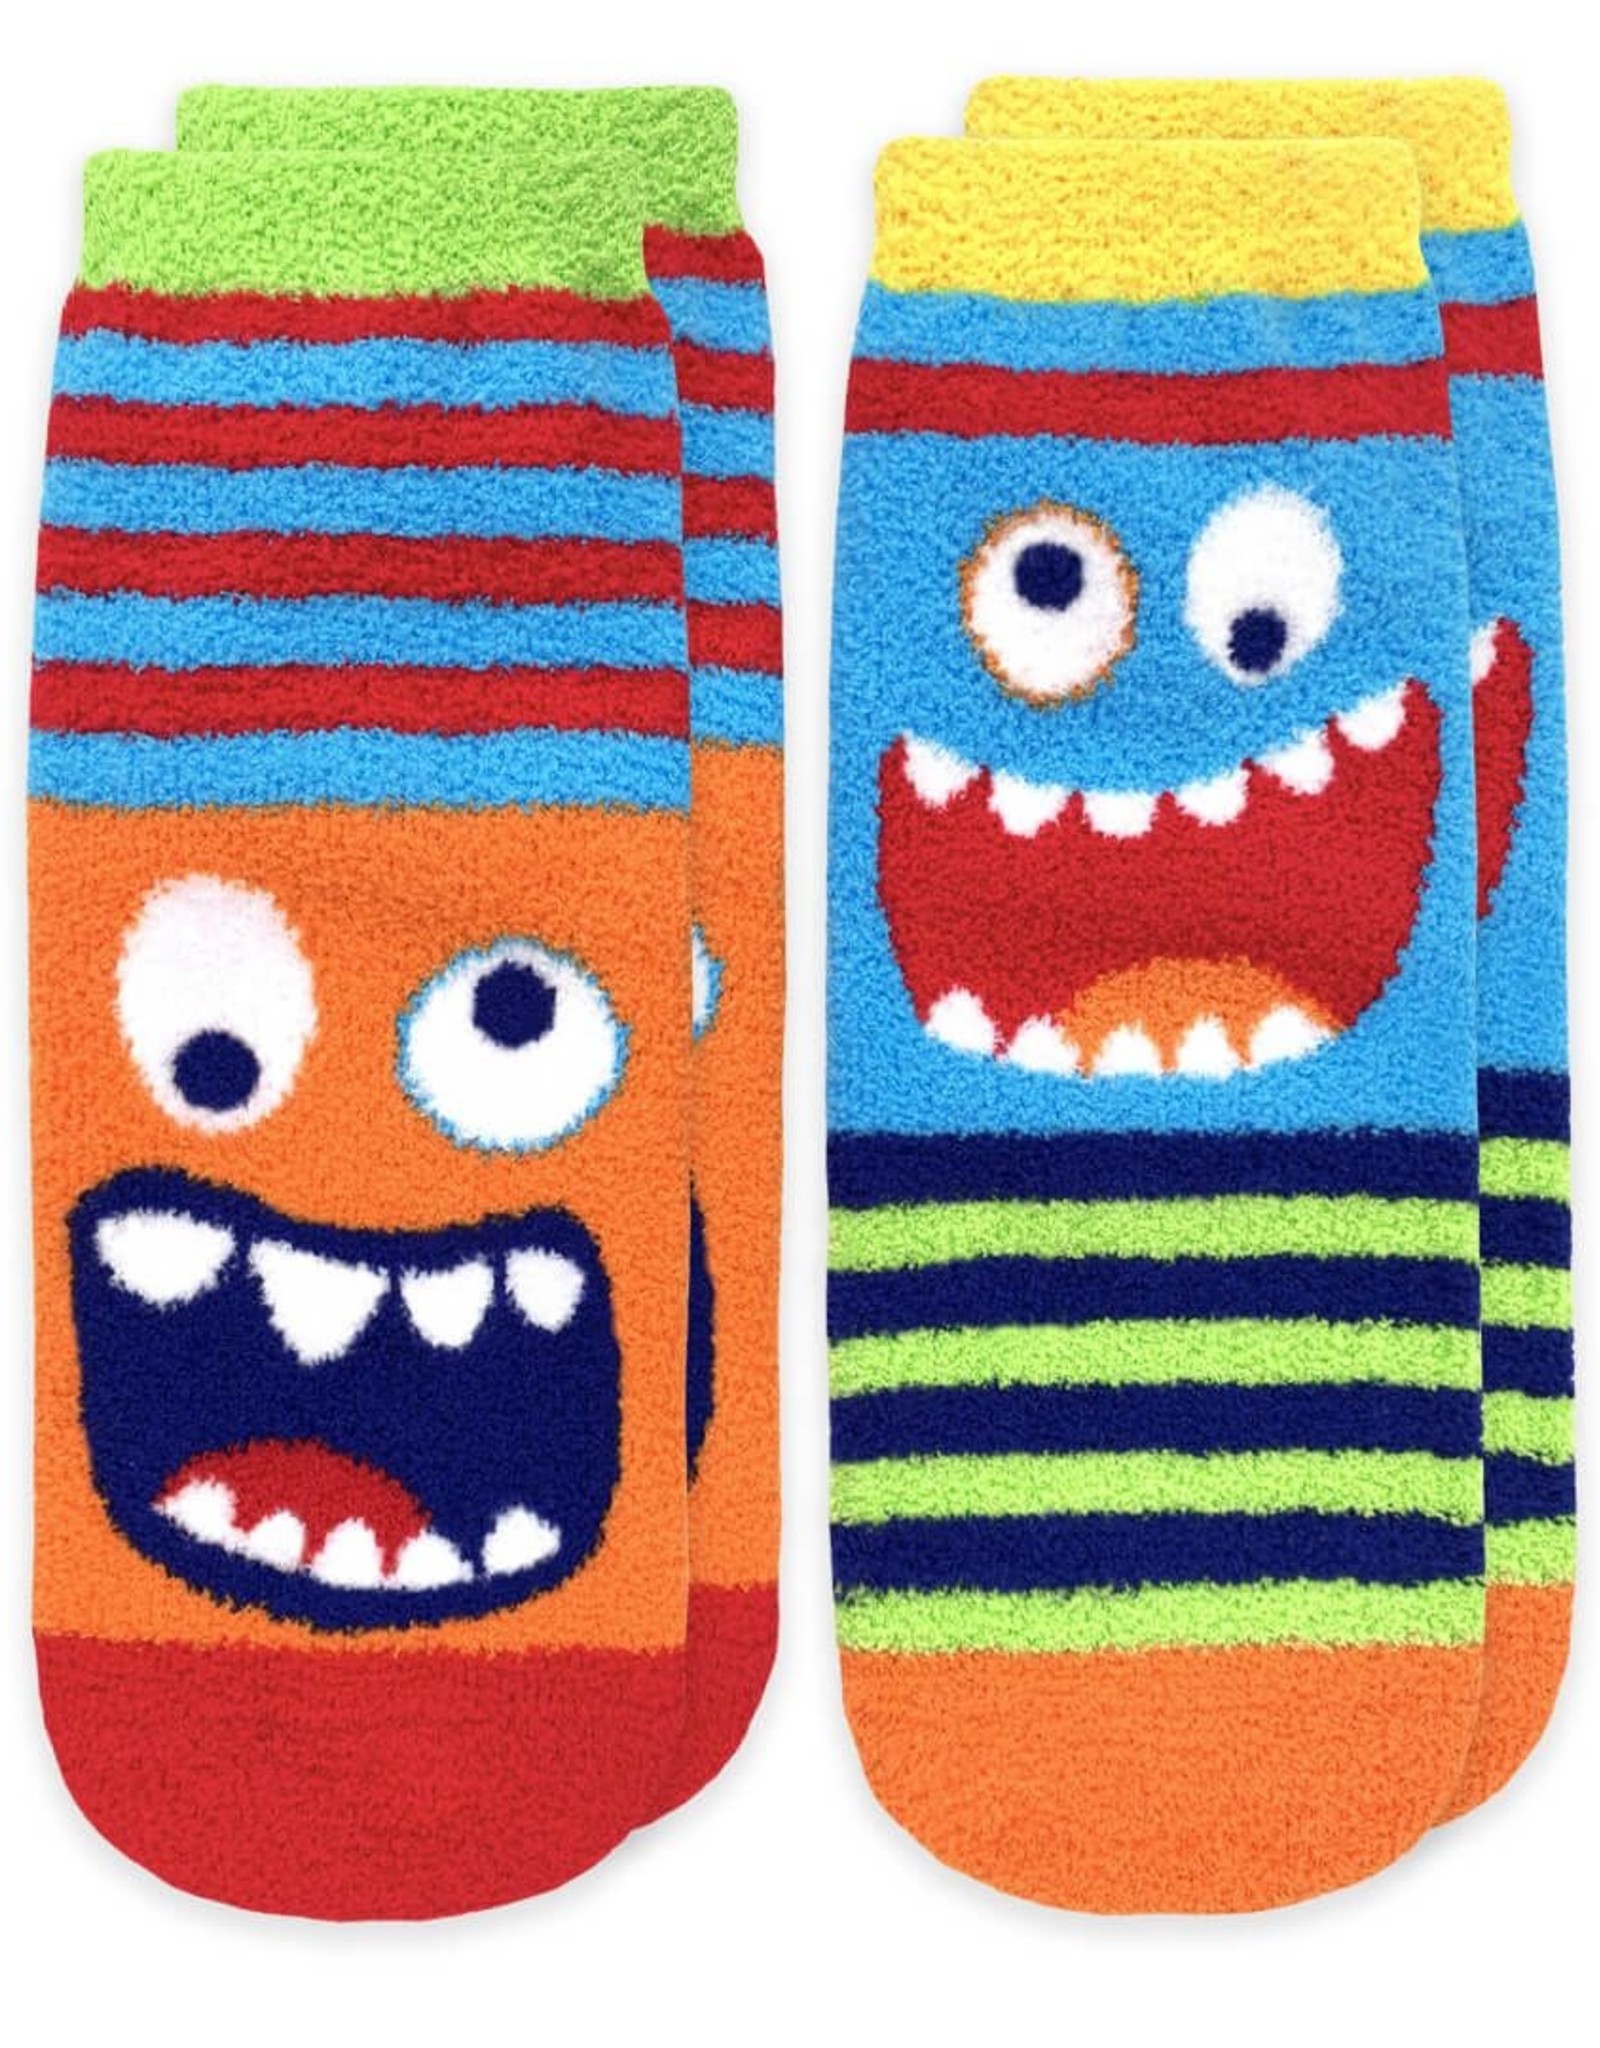 Jefferies Socks Girls Rainbow Fuzzy Non-Skid Slipper Knee High